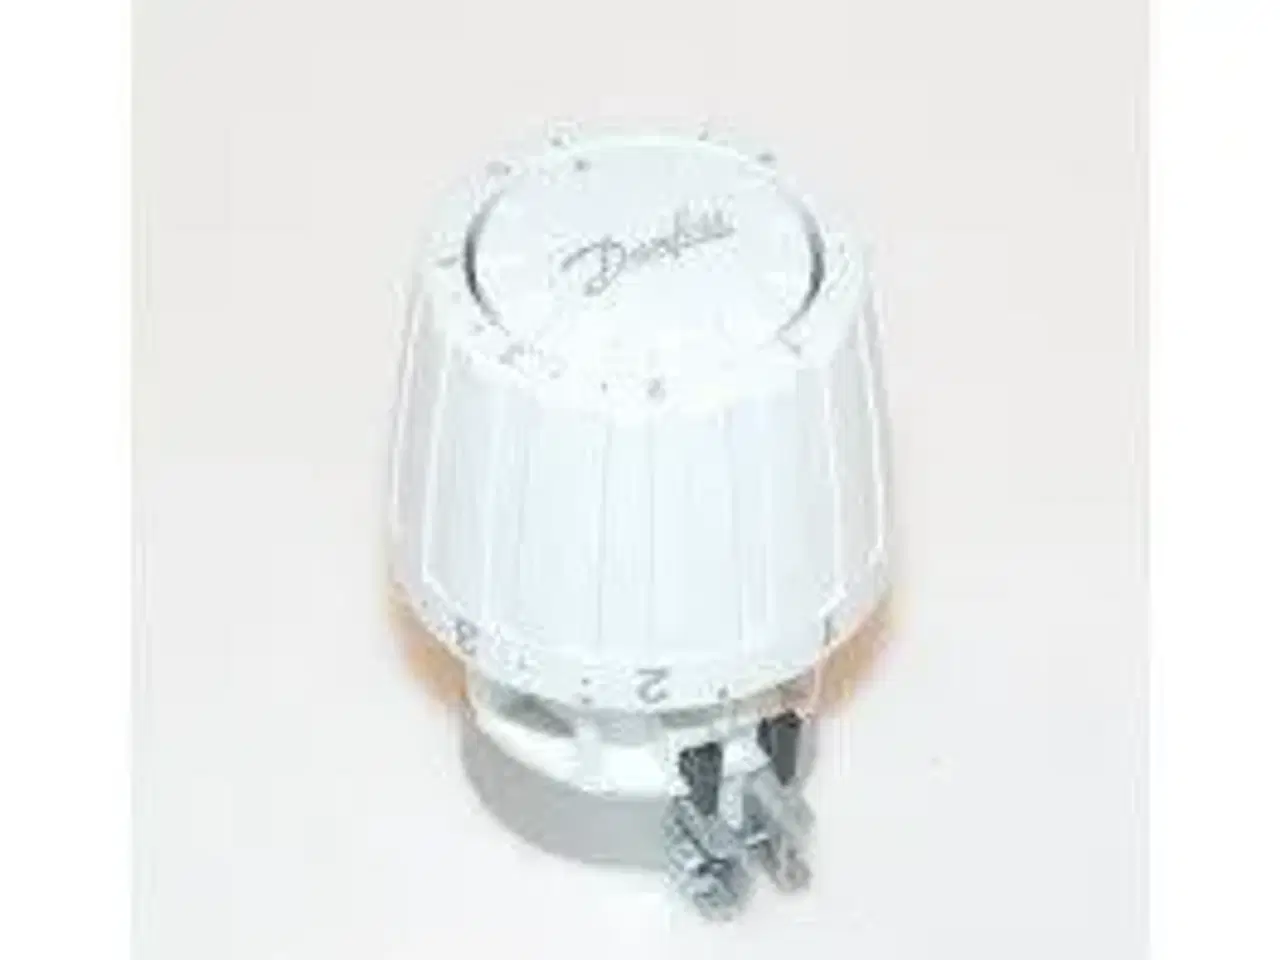 Billede 1 - Termostat. Danfoss RAVL termostat ø26mm 